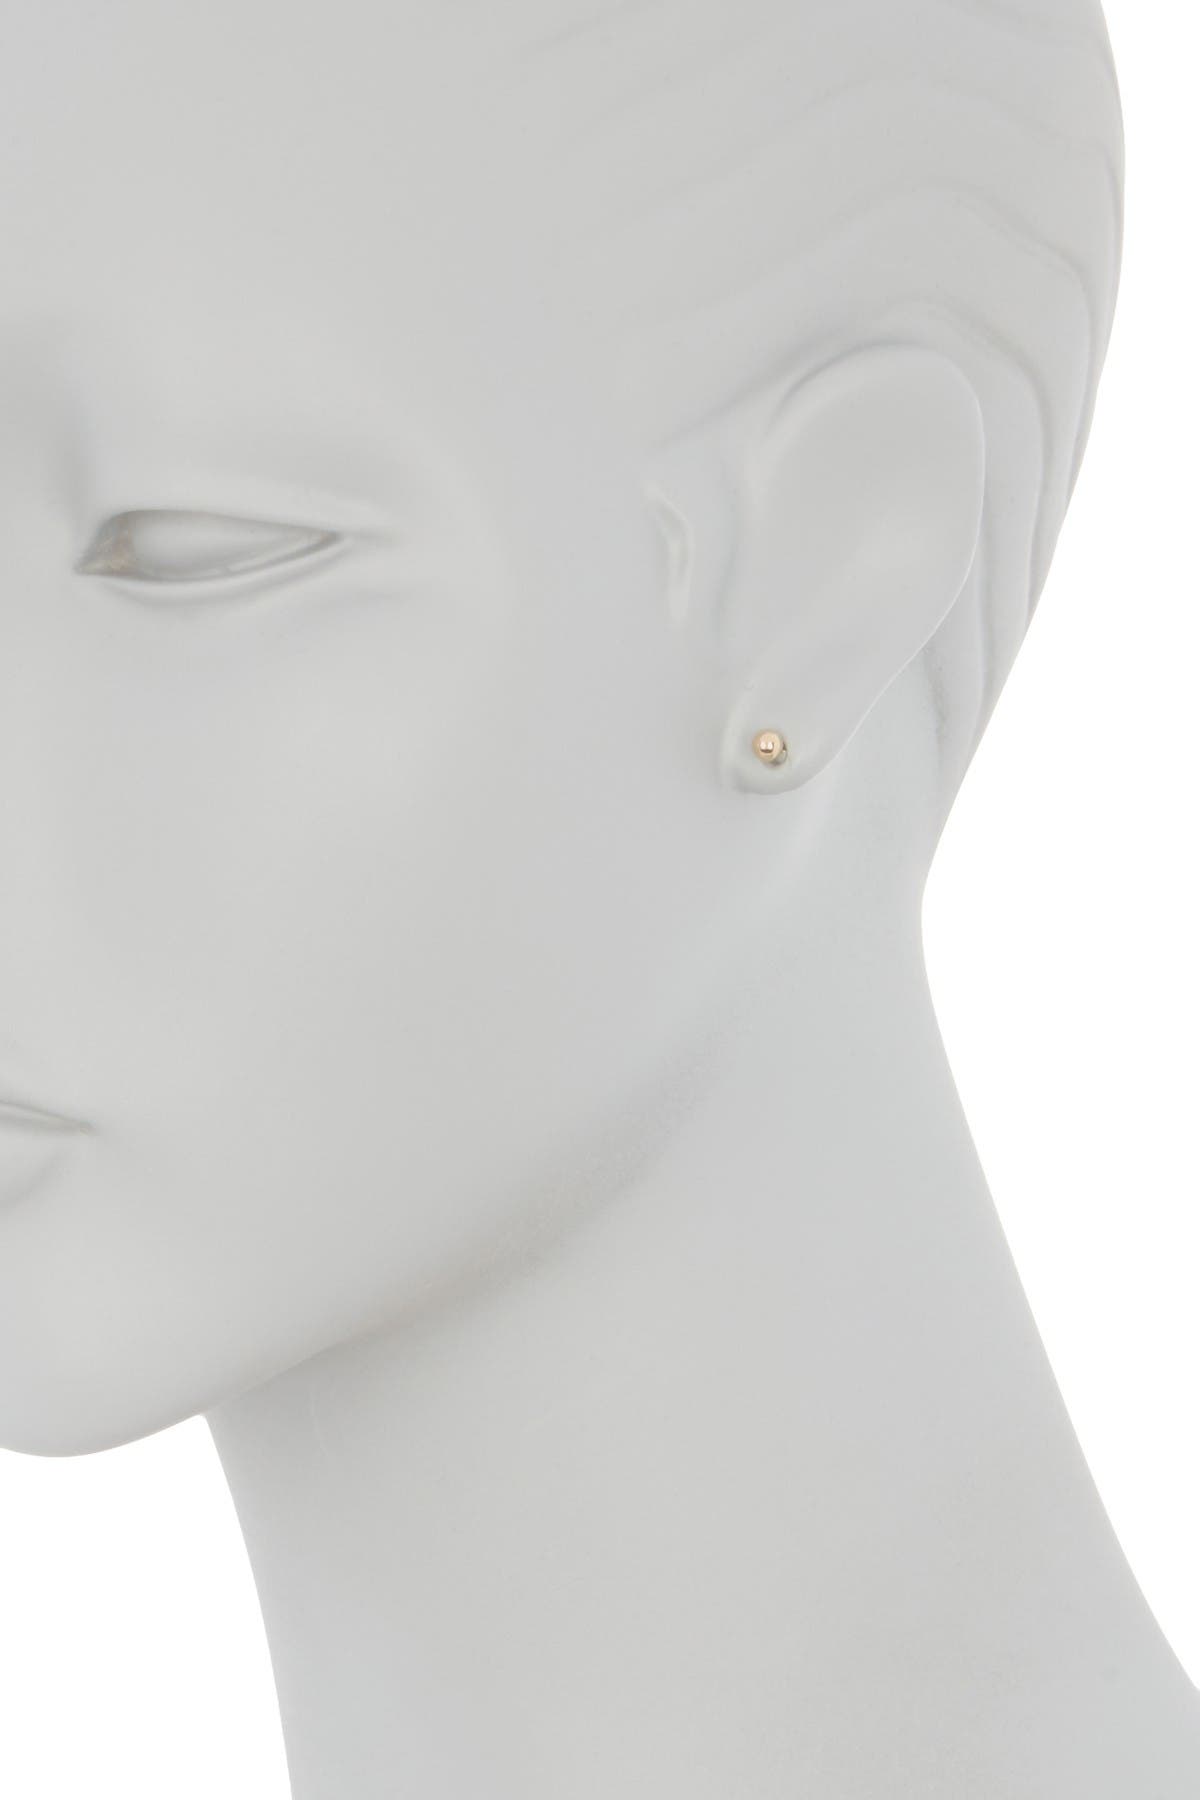 White Ball Earrings and Black Ball Stud Earrings Approx 12mm